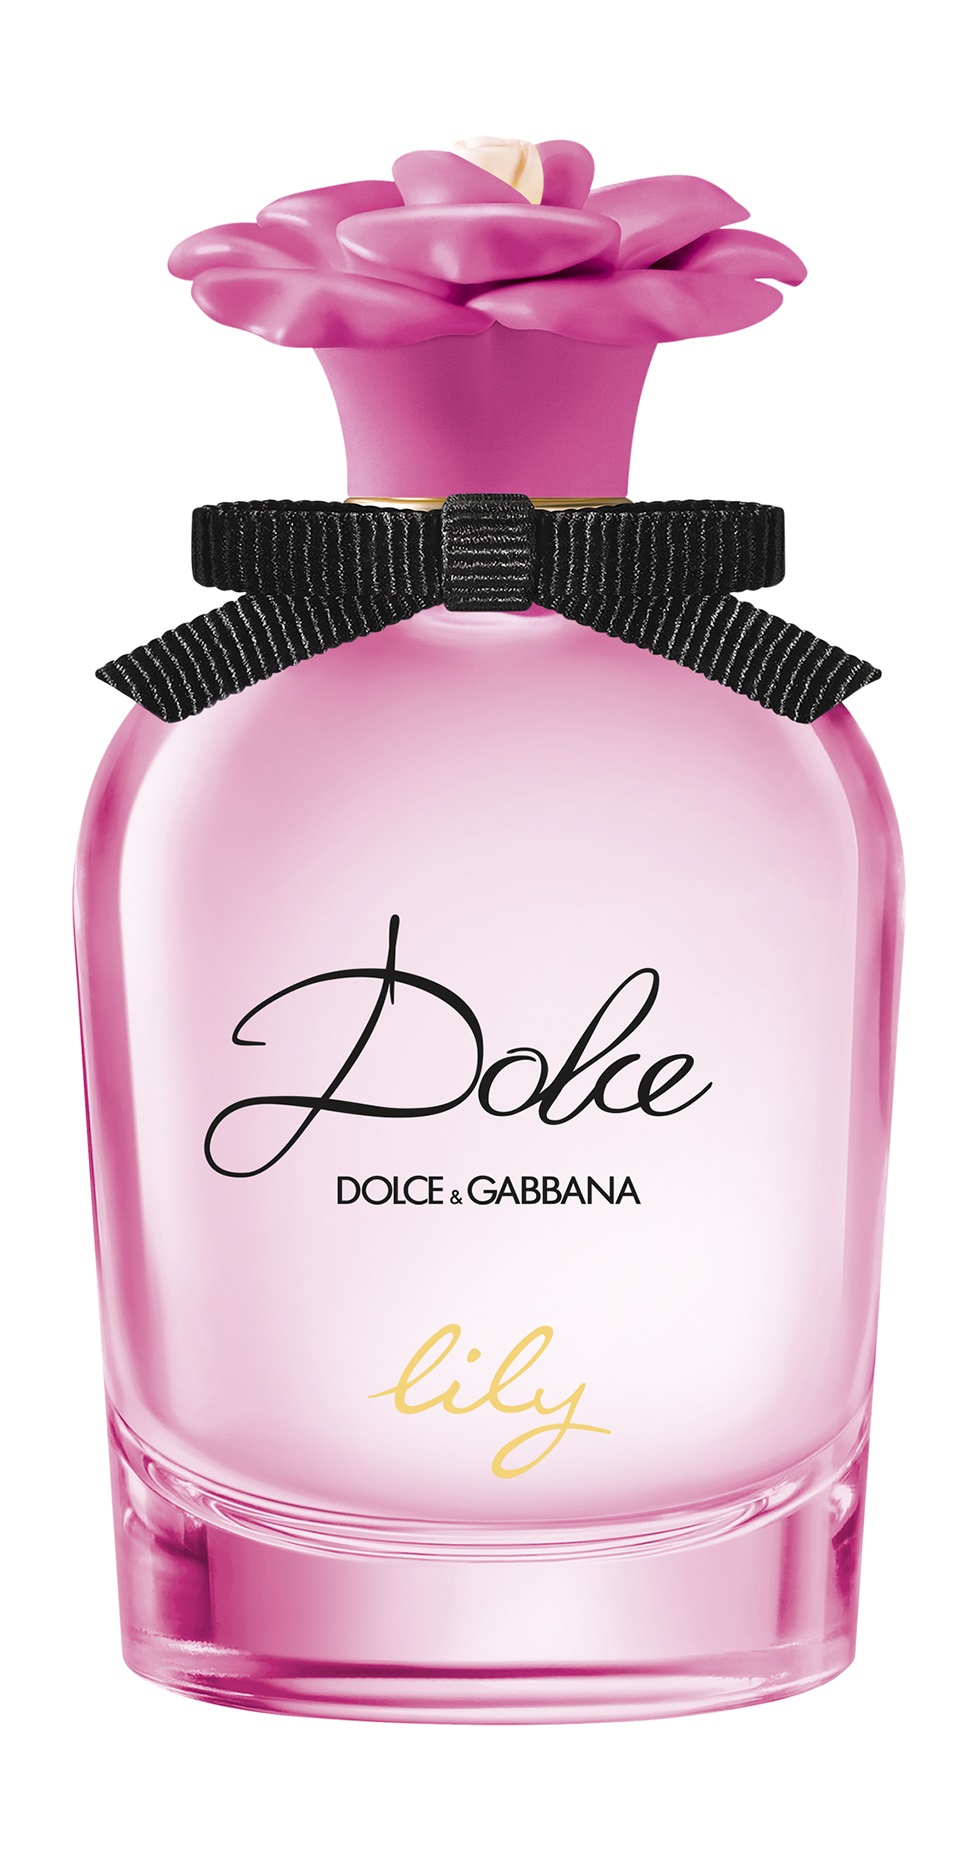 Дольче габбана цена фото. Dolce Gabbana Dolce Garden 50 мл. Парфюмерная вода Dolce & Gabbana Dolce Peony. Духи Дольче Габбана Дольче Шайн. Dolce&Gabbana Dolce Garden 75.